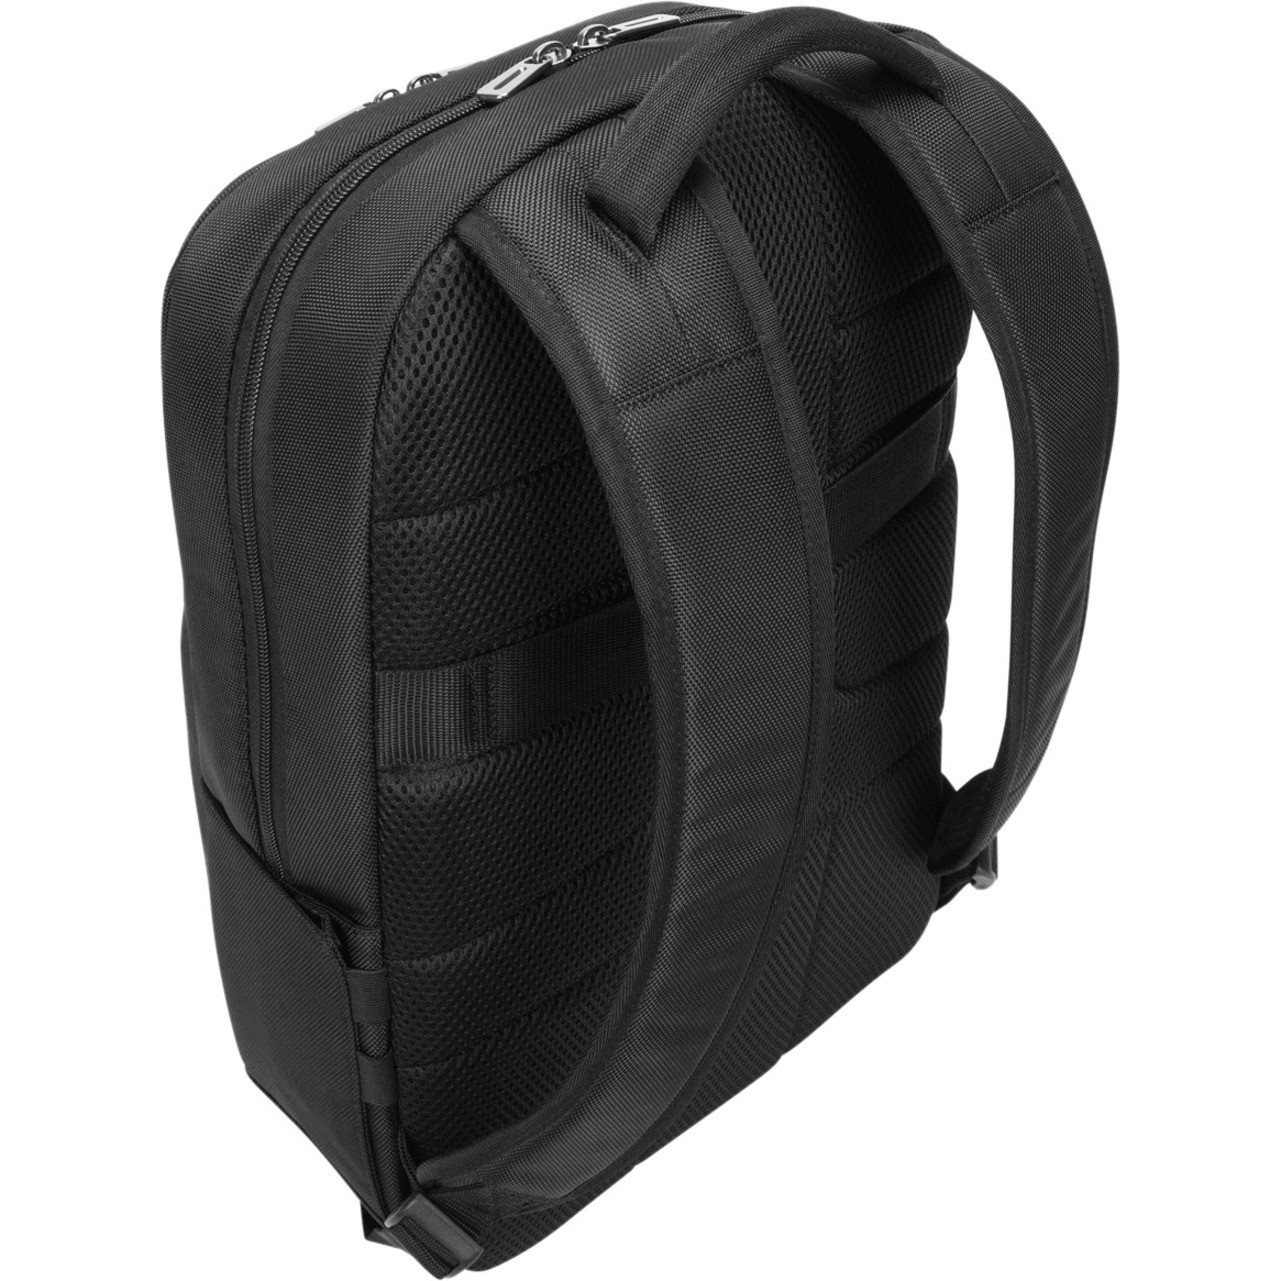 Targus CitySmart TSB893 Carrying Case Rugged (Backpack) for 12″ to 16″ NotebookGrayWeather Resistant BaseMesh BodyShoulder Strap, Tro… TSB893